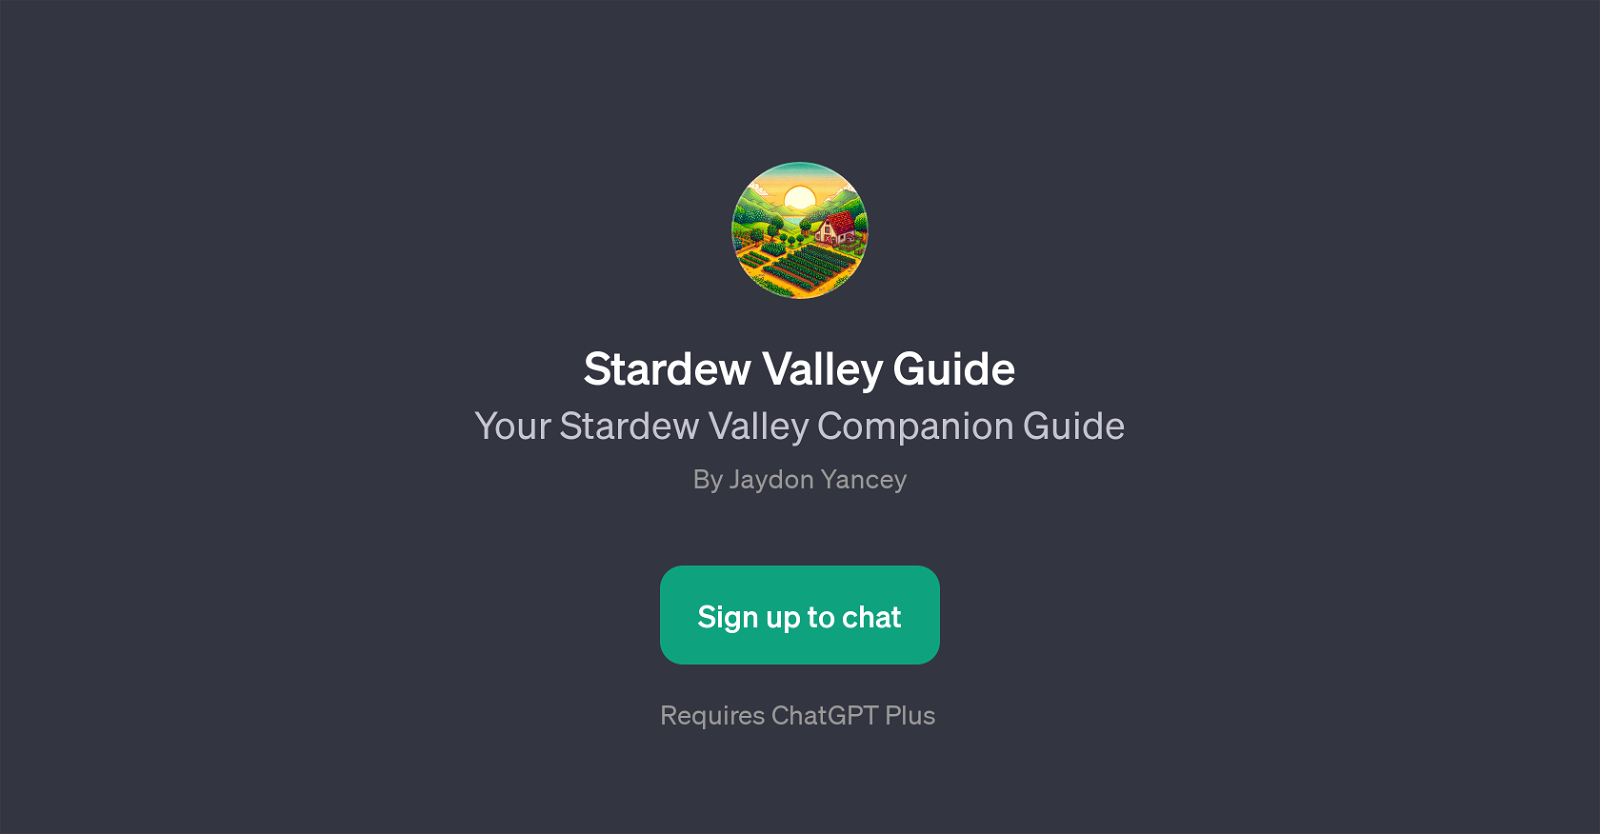 Stardew Valley Guide website